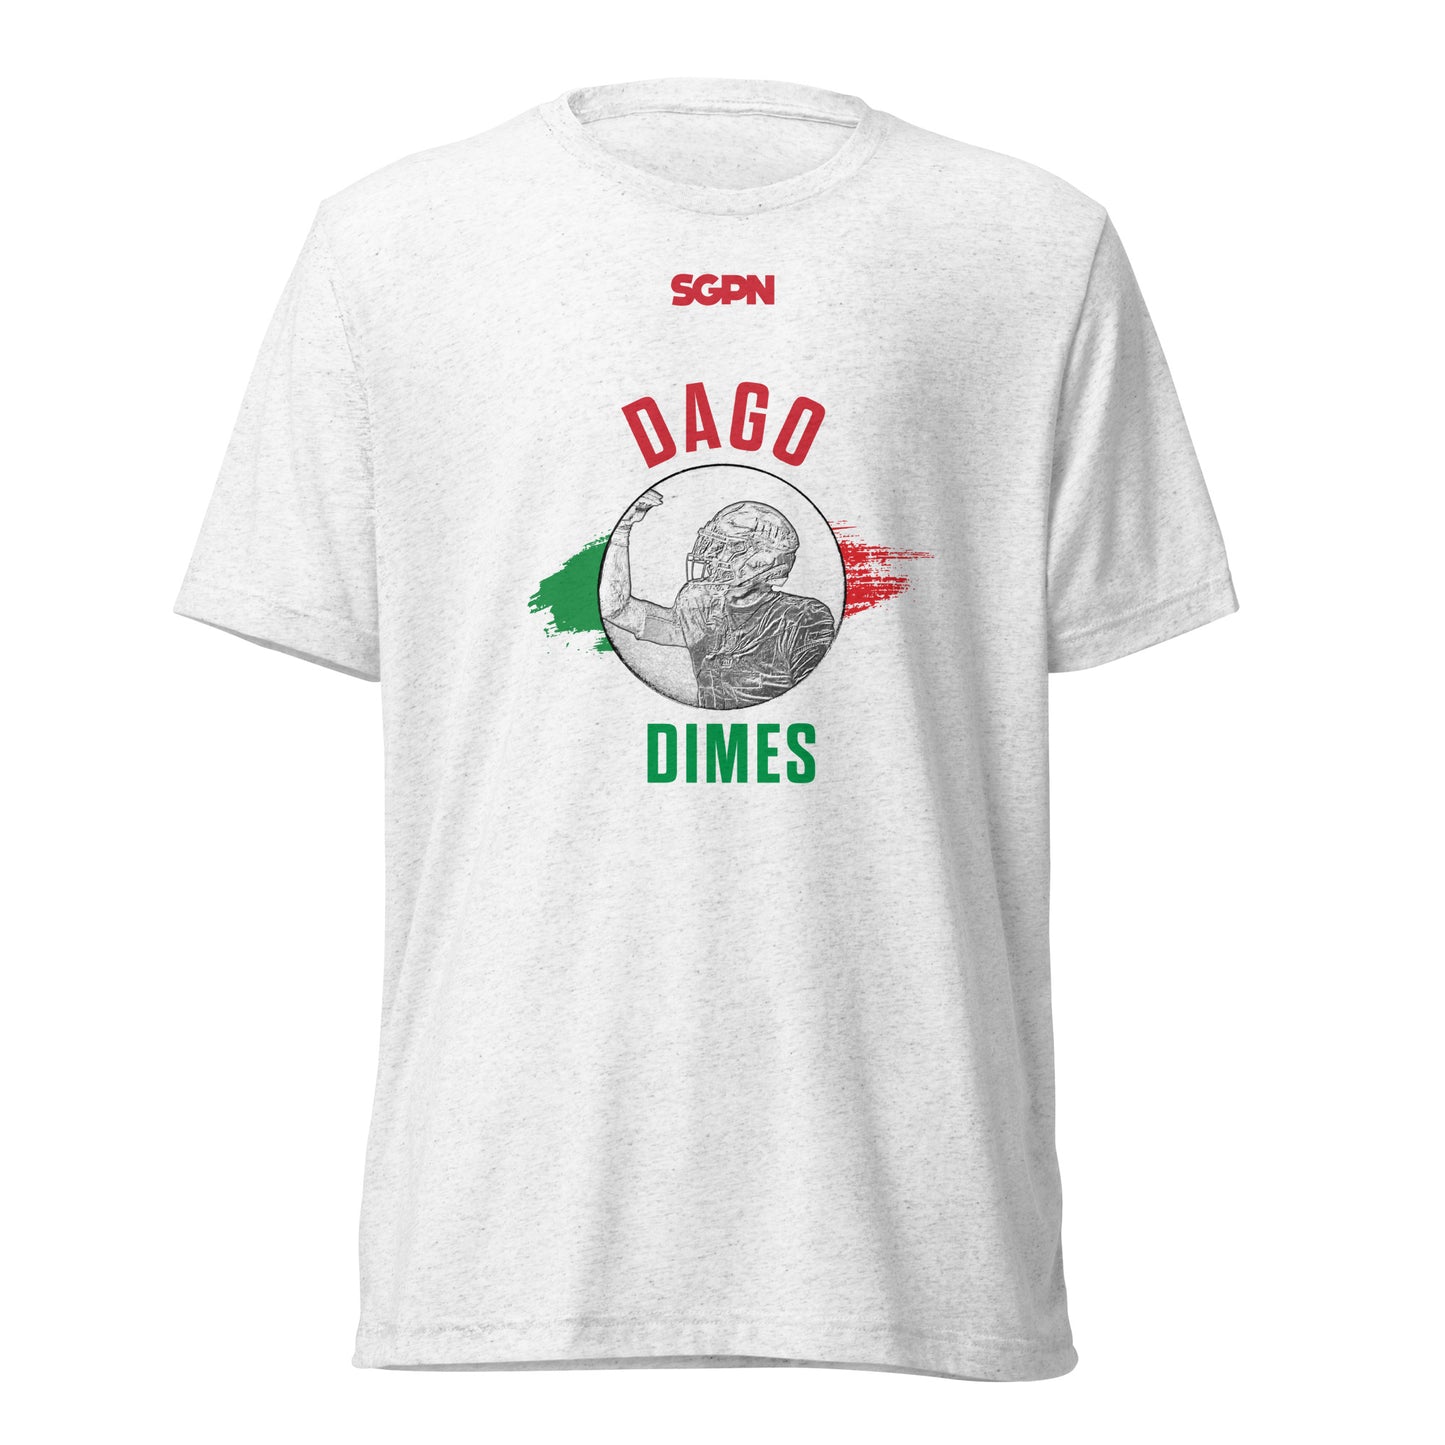 Dago Dimes - Short sleeve t-shirt